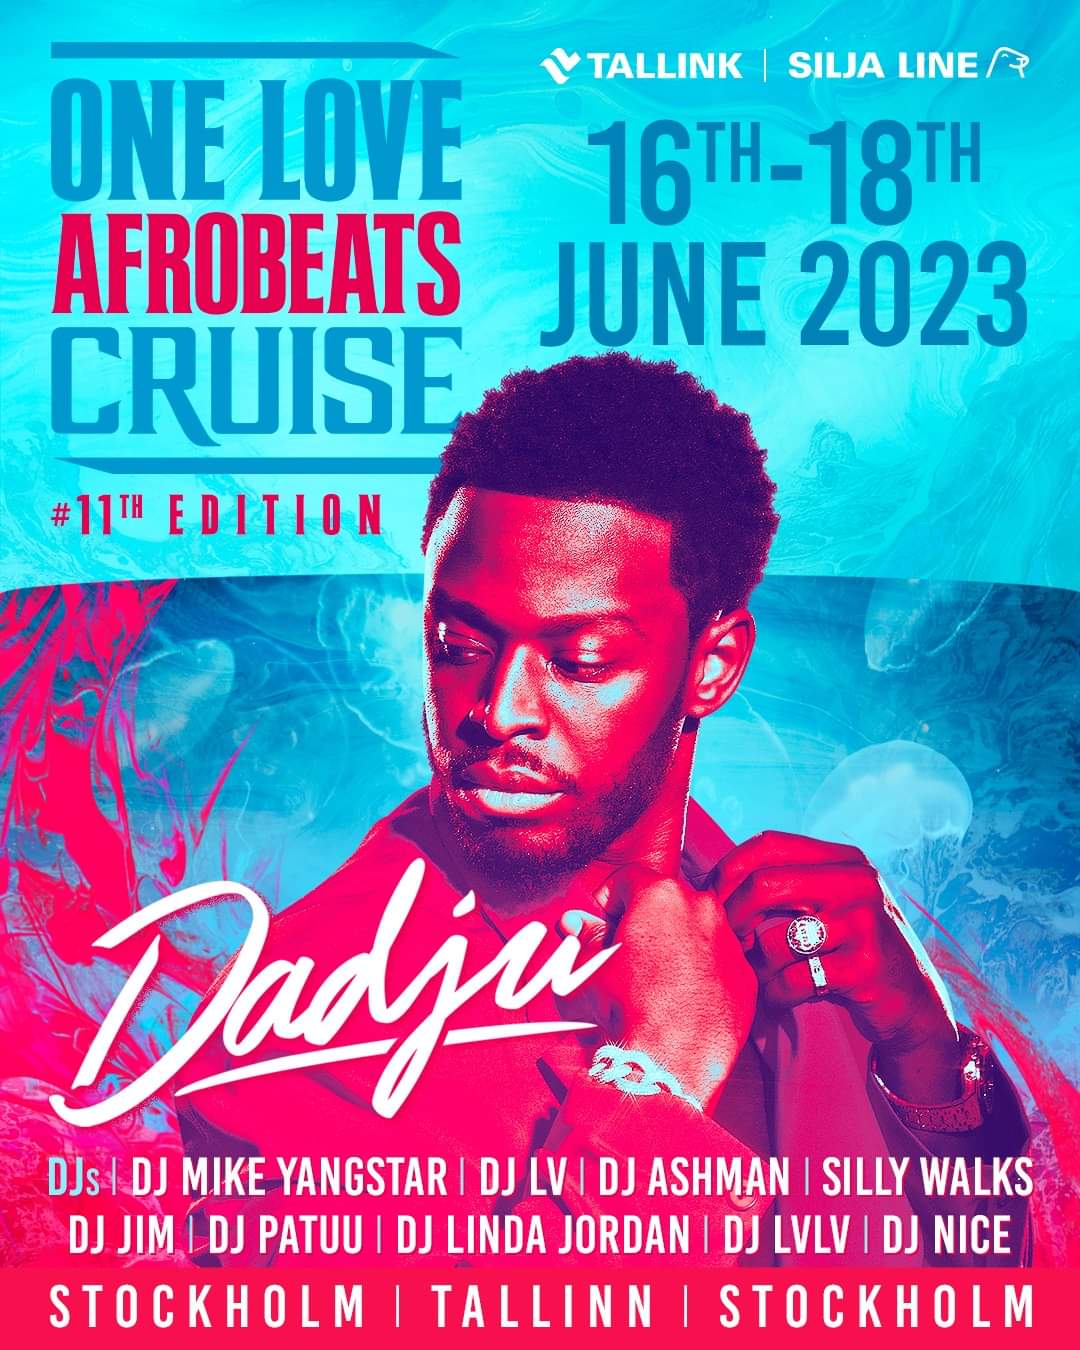 EVENEMANG! One Love Afrobeats cruise 2023!